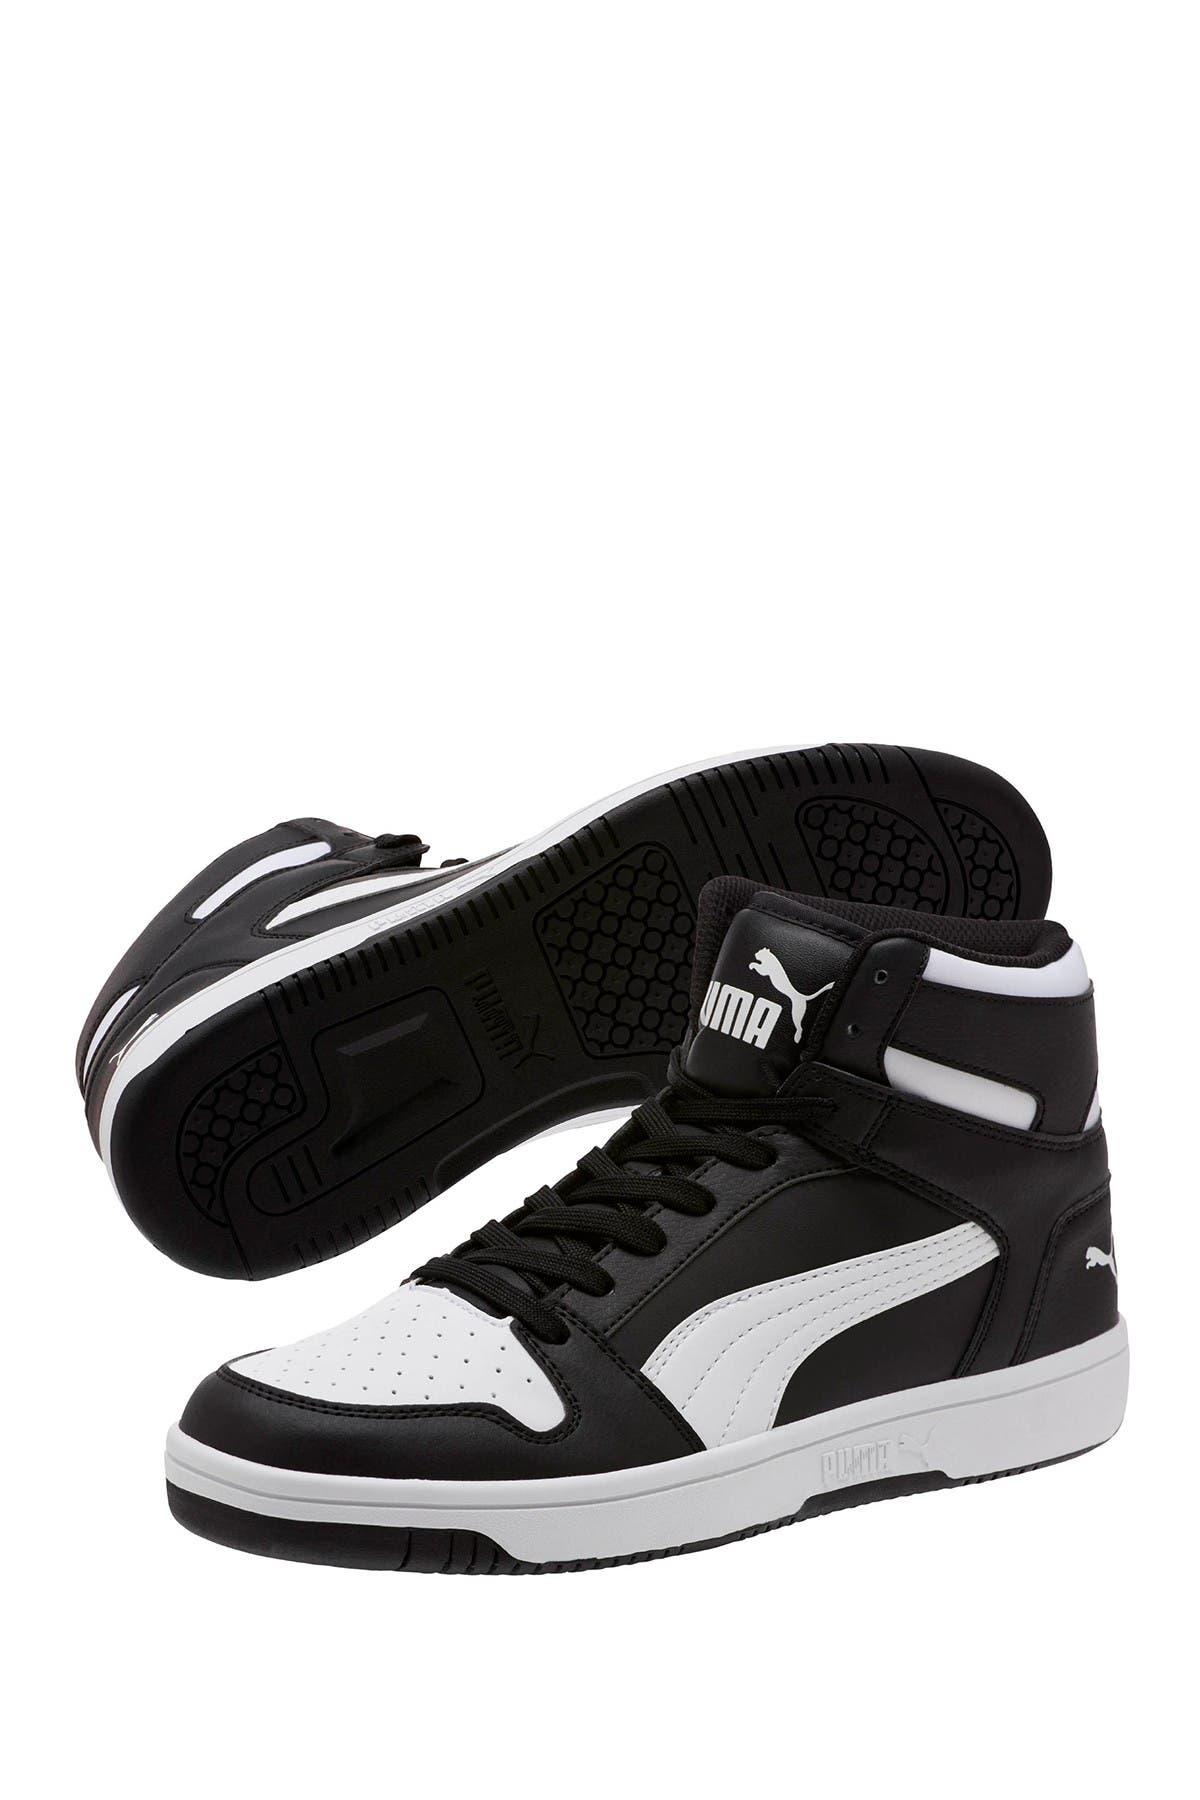 PUMA Rebound Layup Sneakers in Black/White (Black) for Men - Save 63% - Lyst